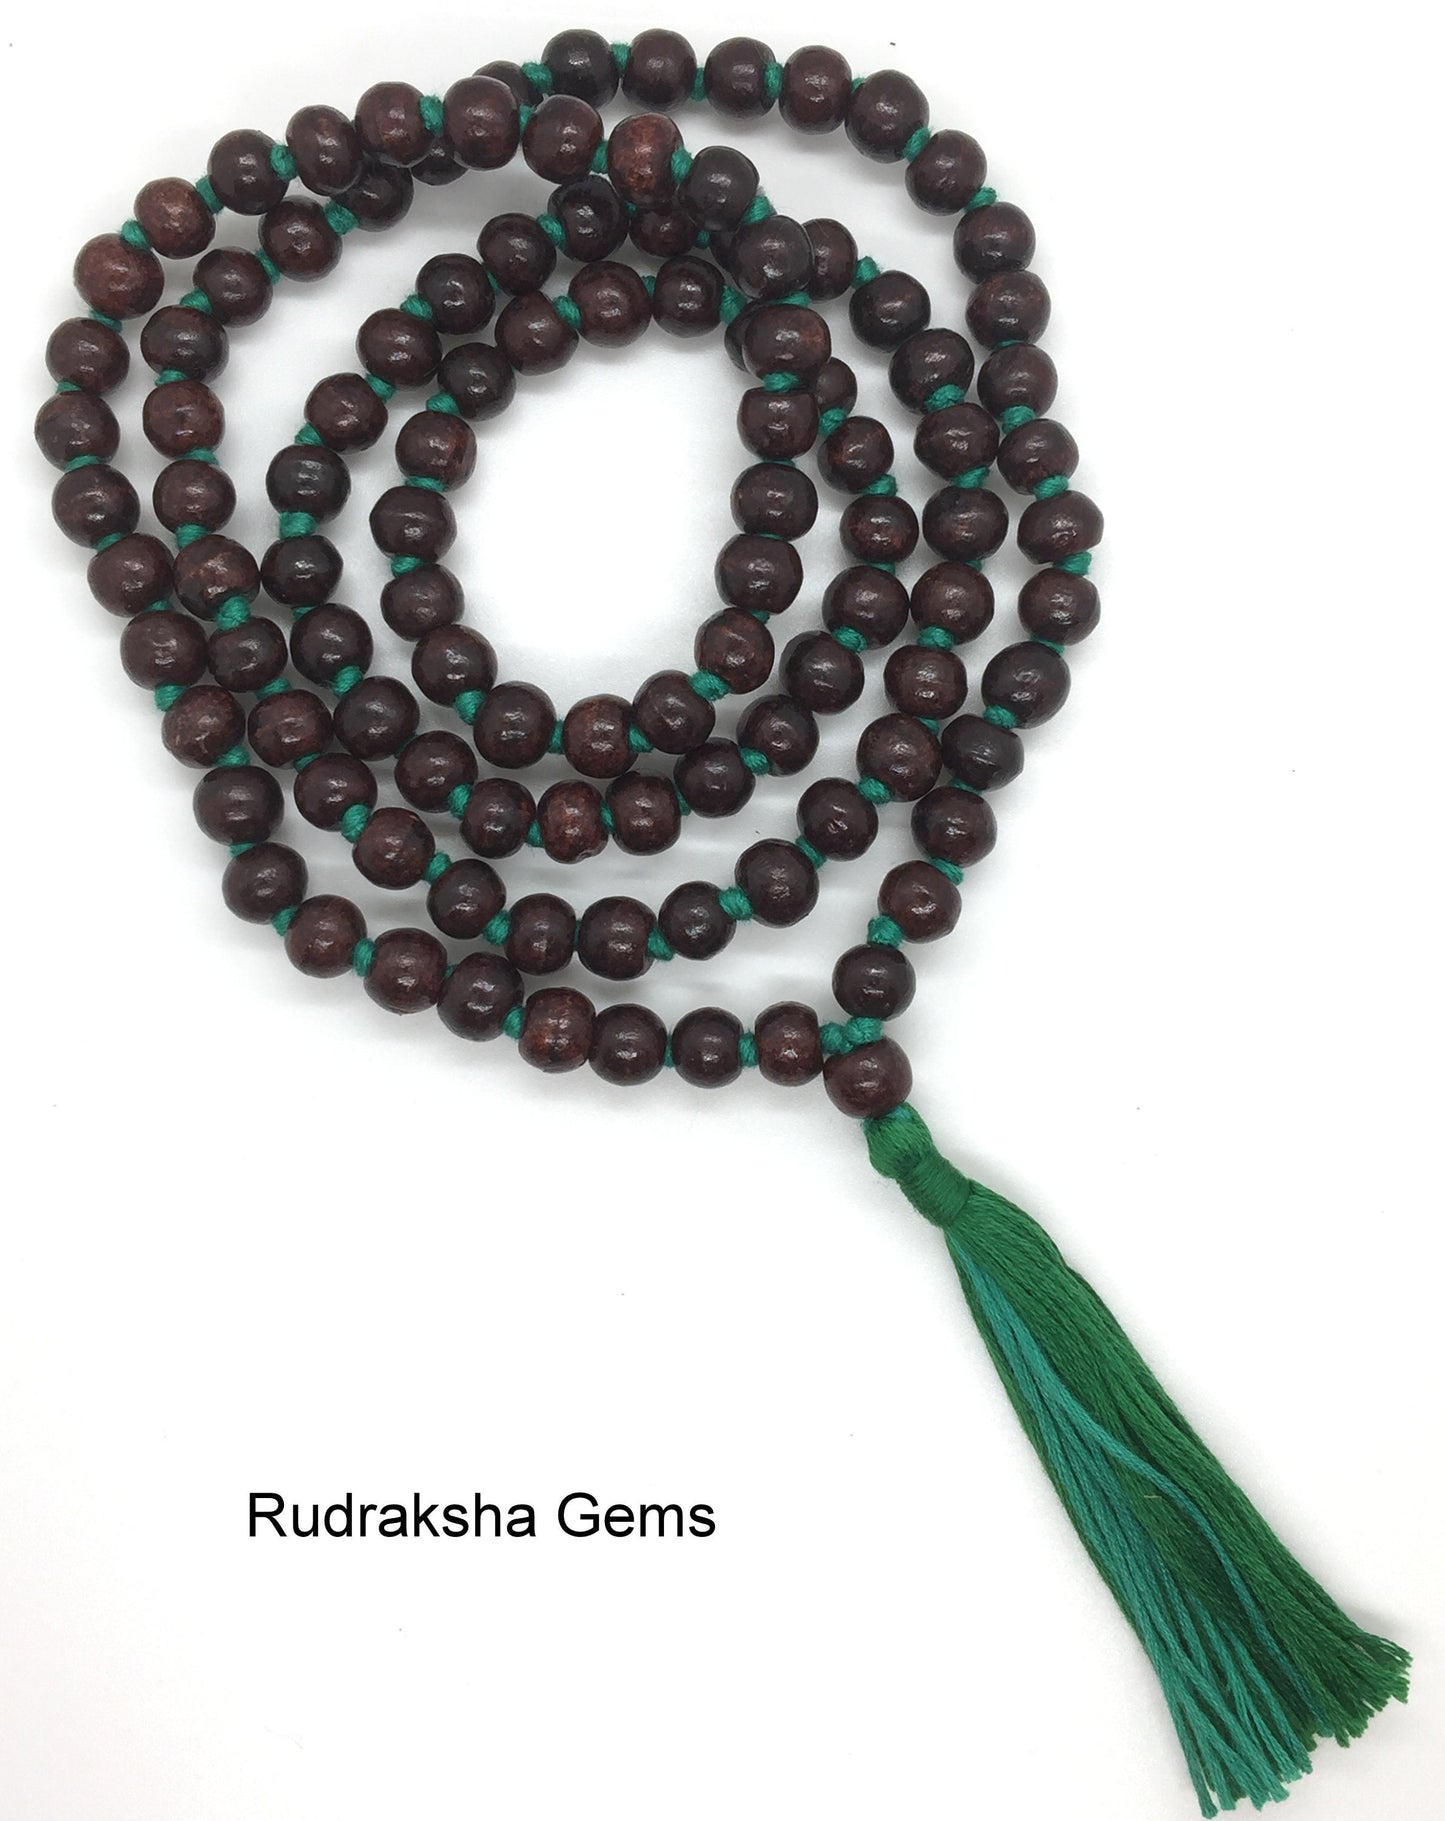 Red Rosewood Handmade Rosary Mala 108 Beads - Beautiful Tassel Mala - Colored Long Tassel & knots - 8mm Beads Hindu Yoga Mediation japa mala